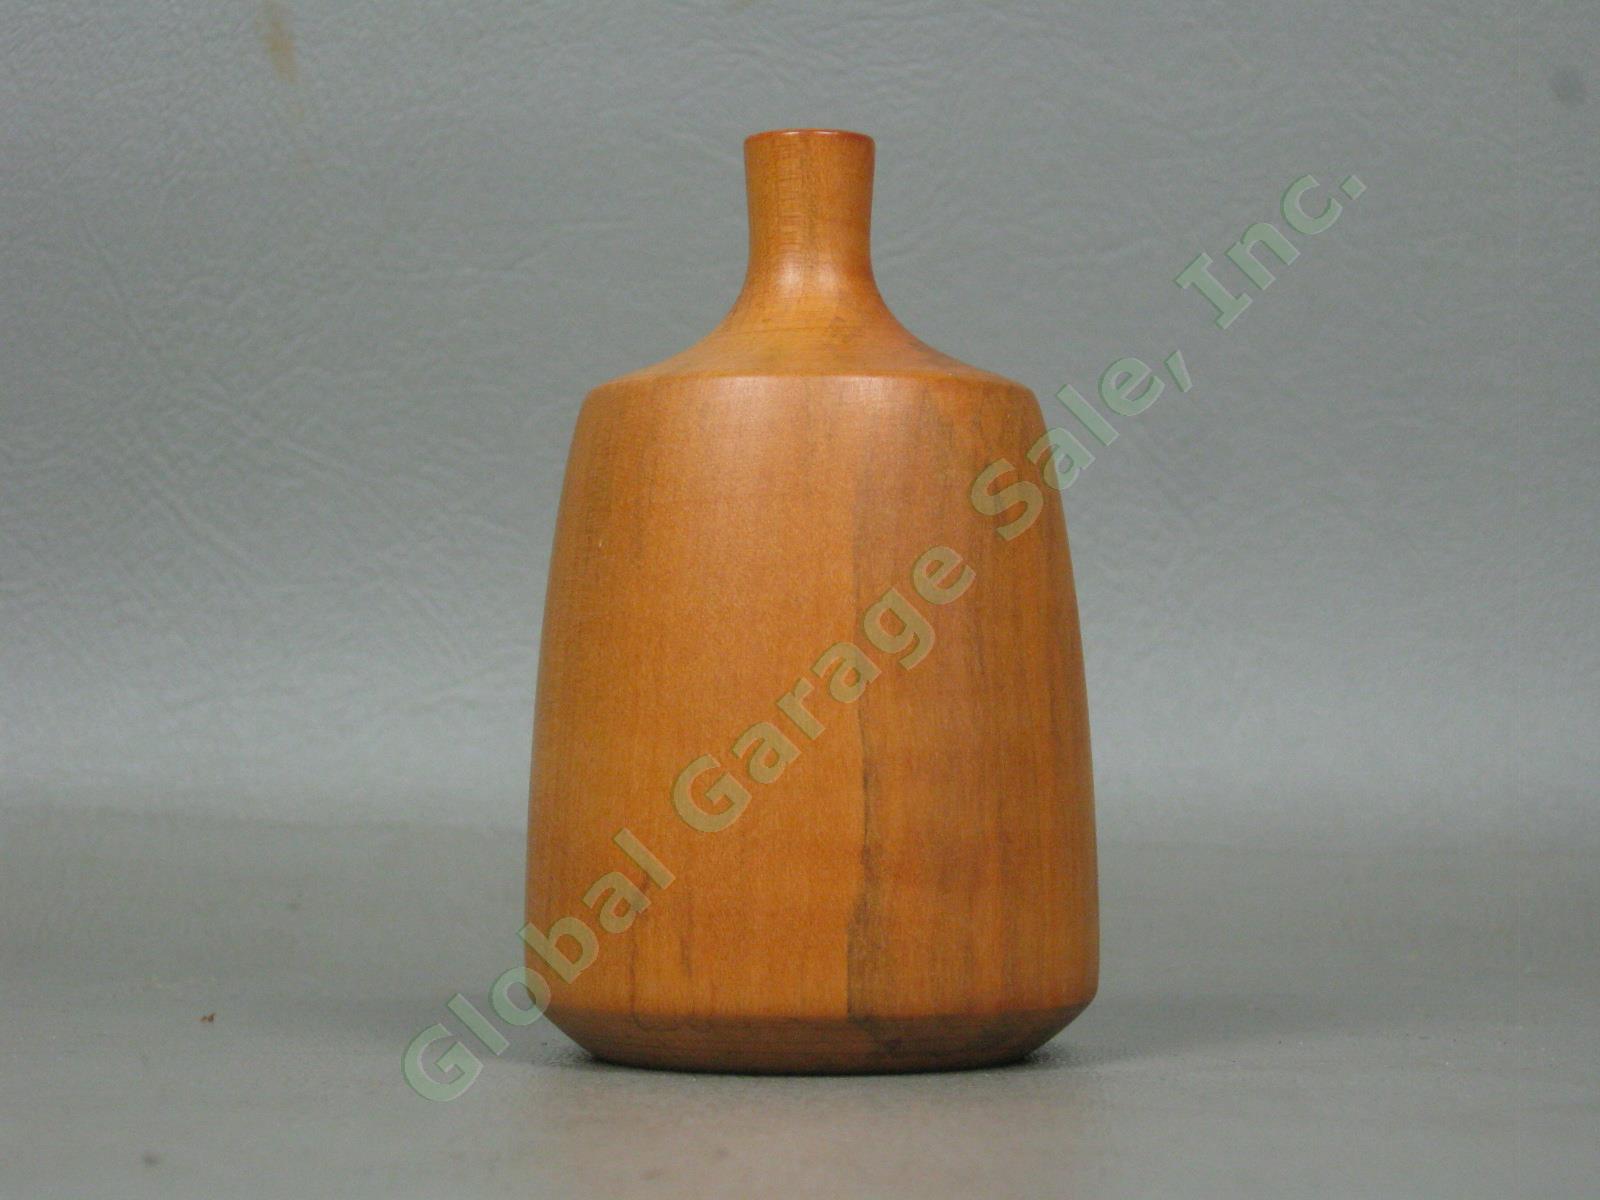 Rude Osolnik Originals Signed Wood Turned Bud Twig Vase Weed Pot Rare Maple NR!